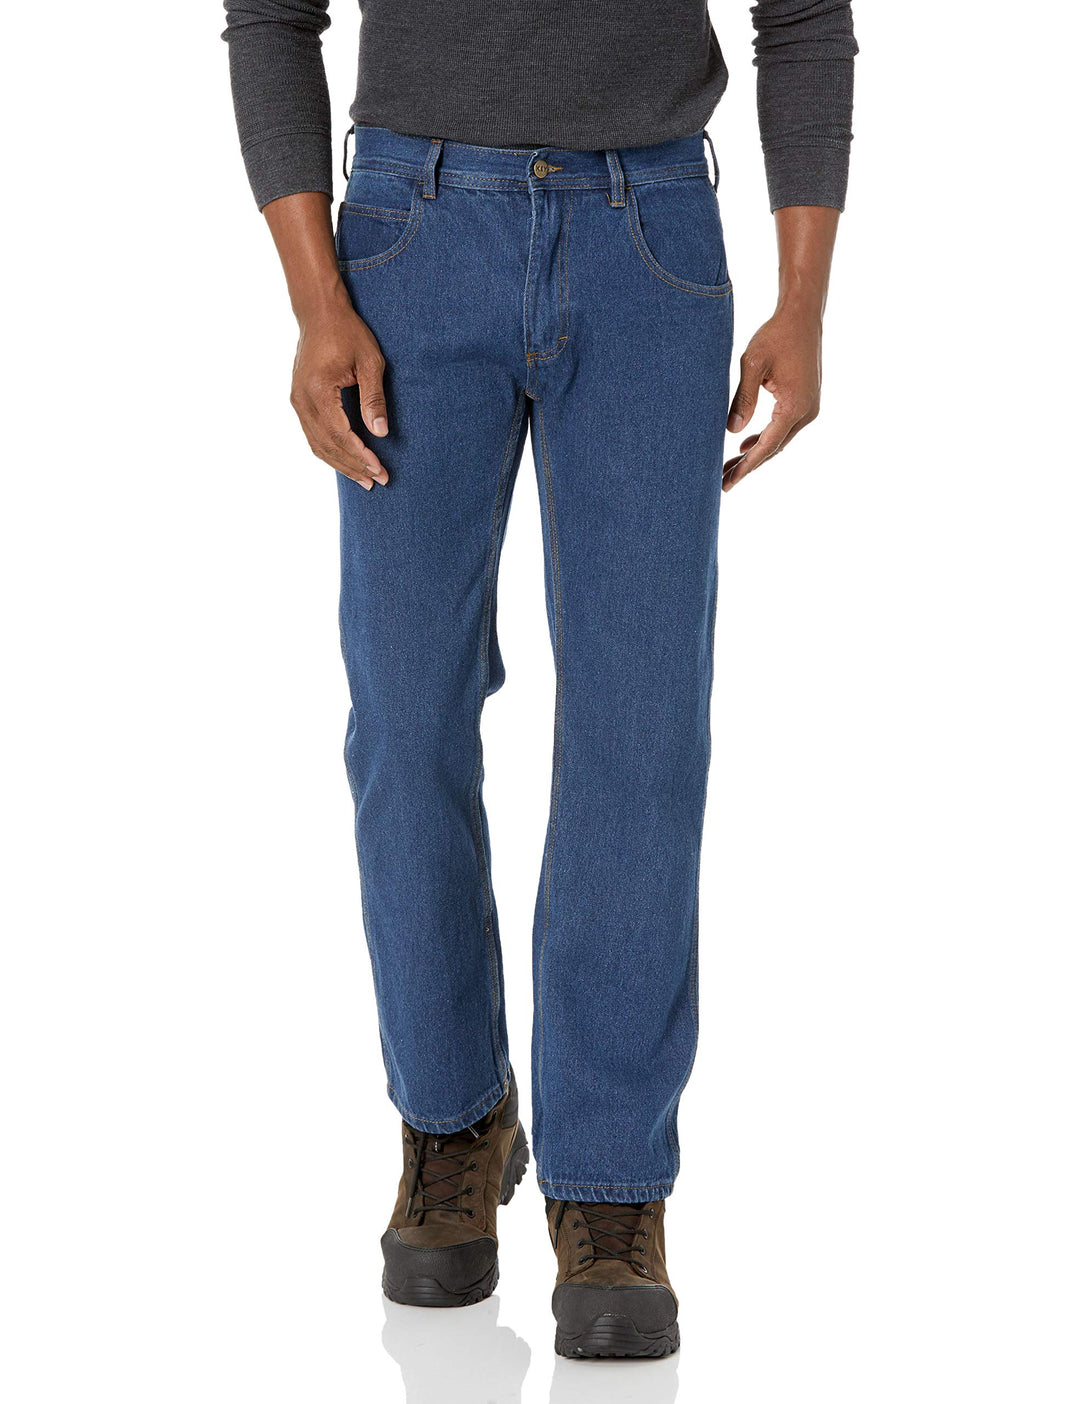 Key Apparel Men's Performance Comfort 5-Pocket Jean, Indigo, 32W x 30L